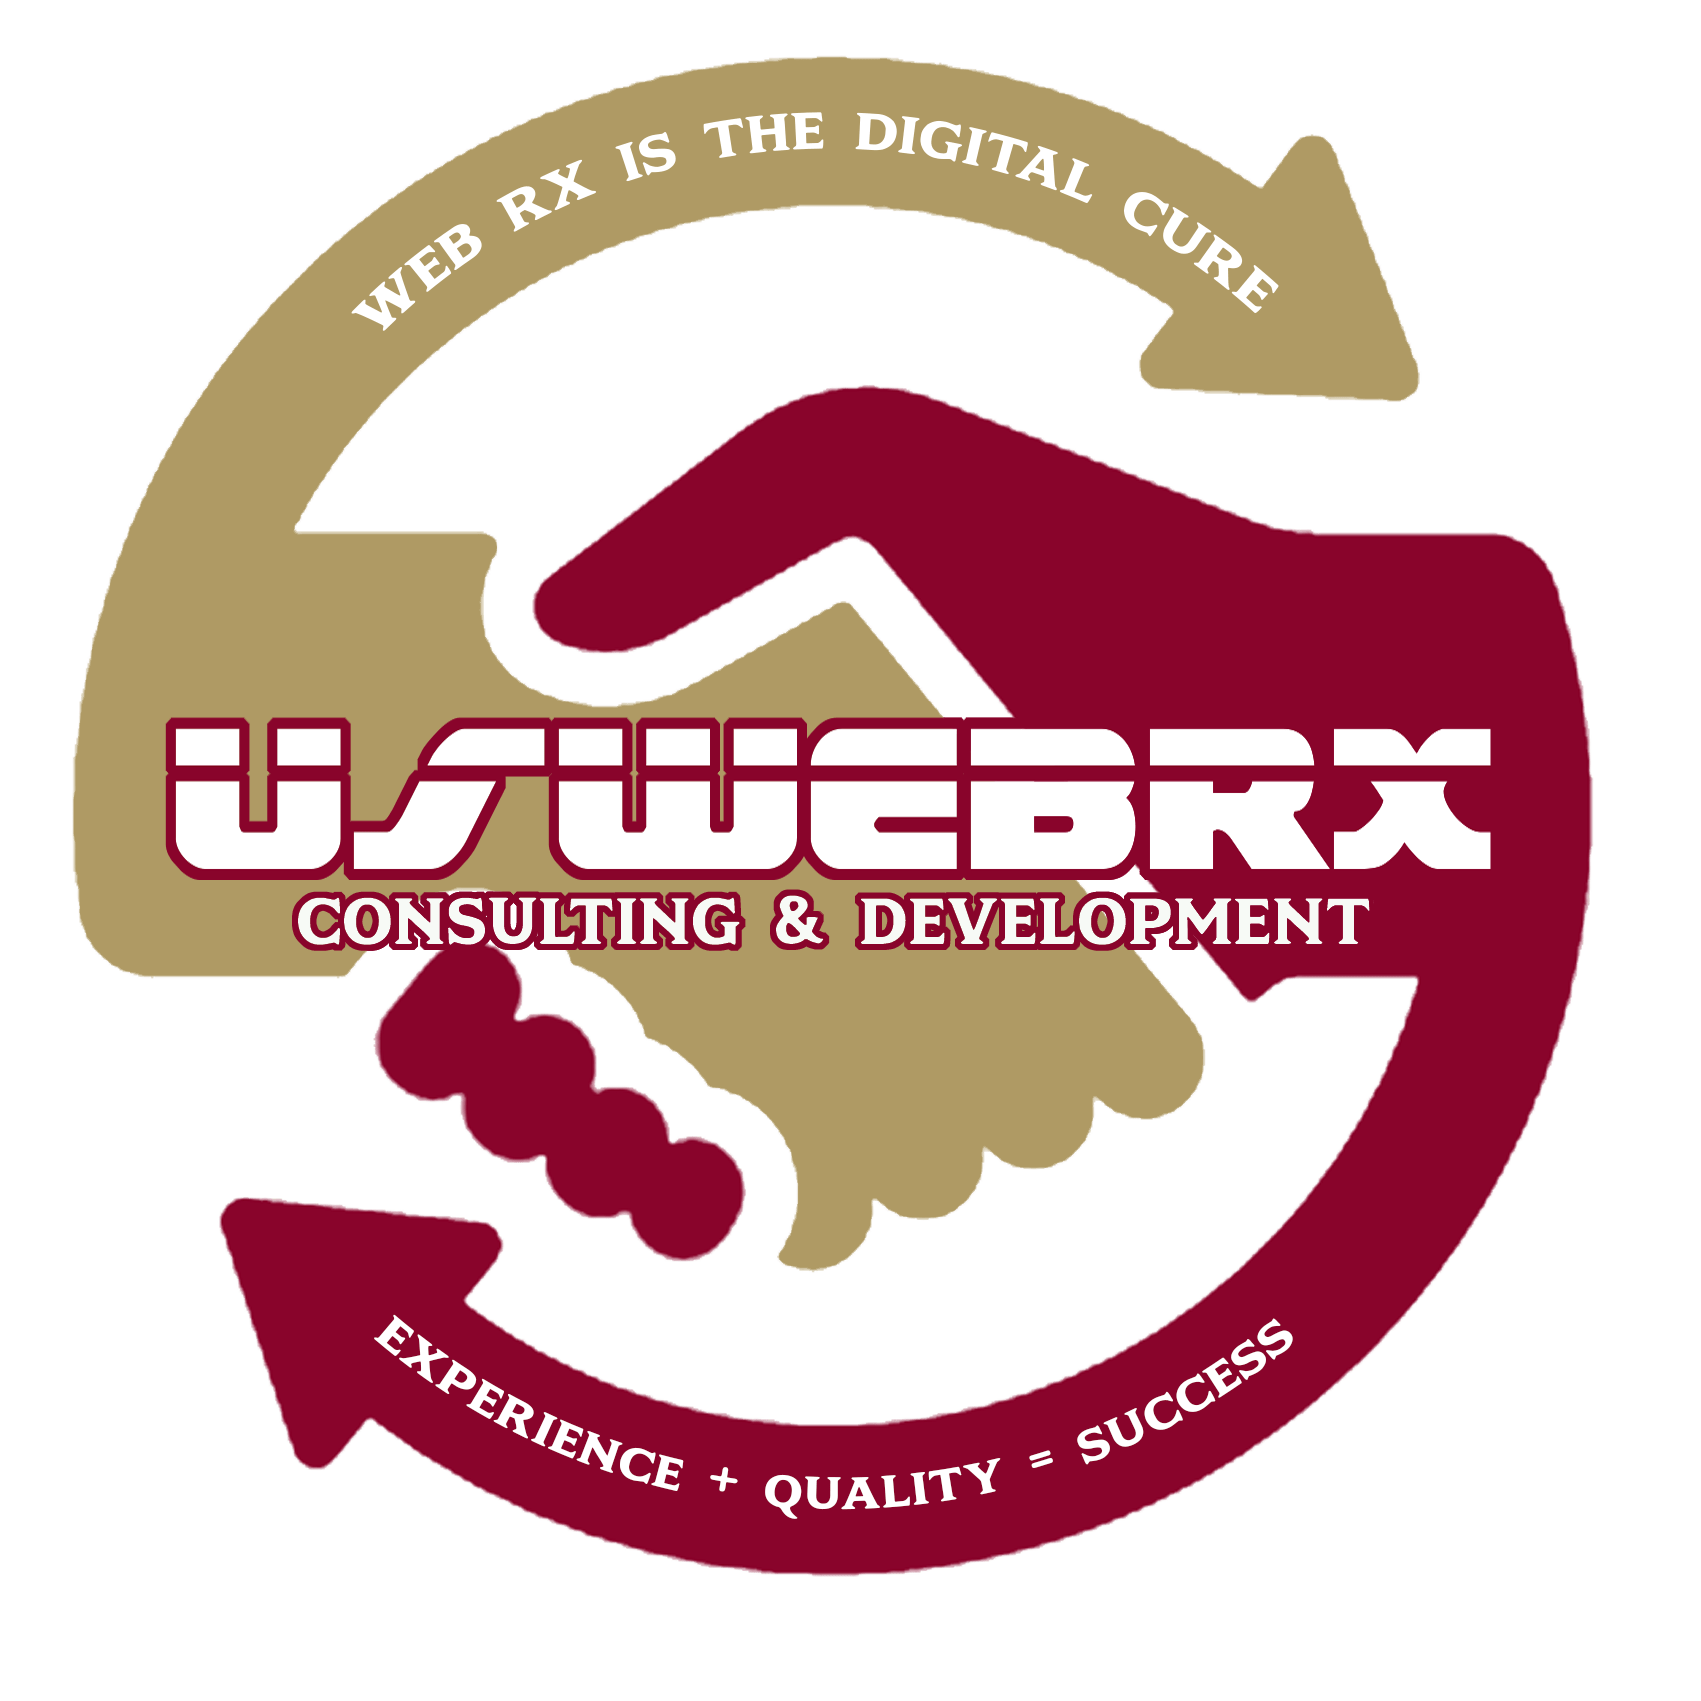 USWEBRX 3.0 logo